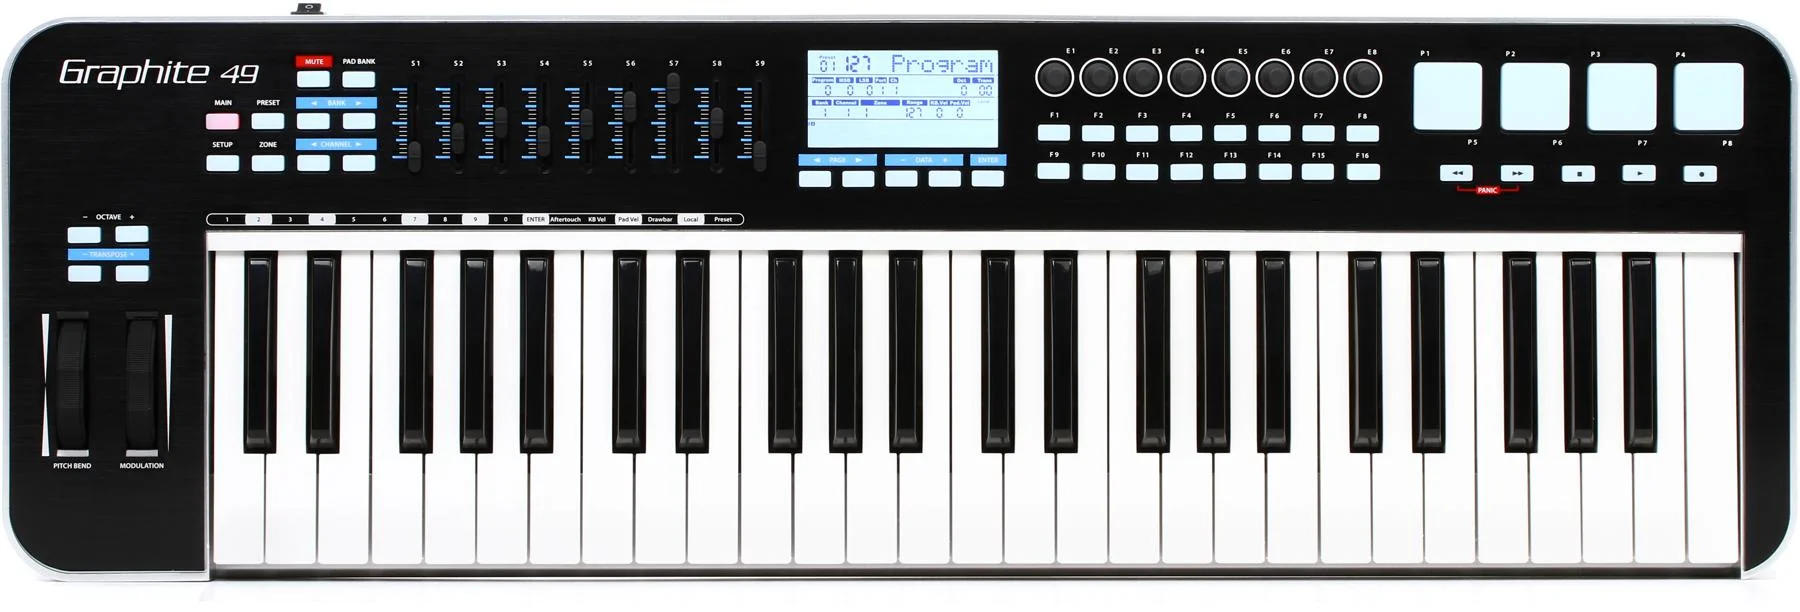 midi keyboards compatible with fl studio